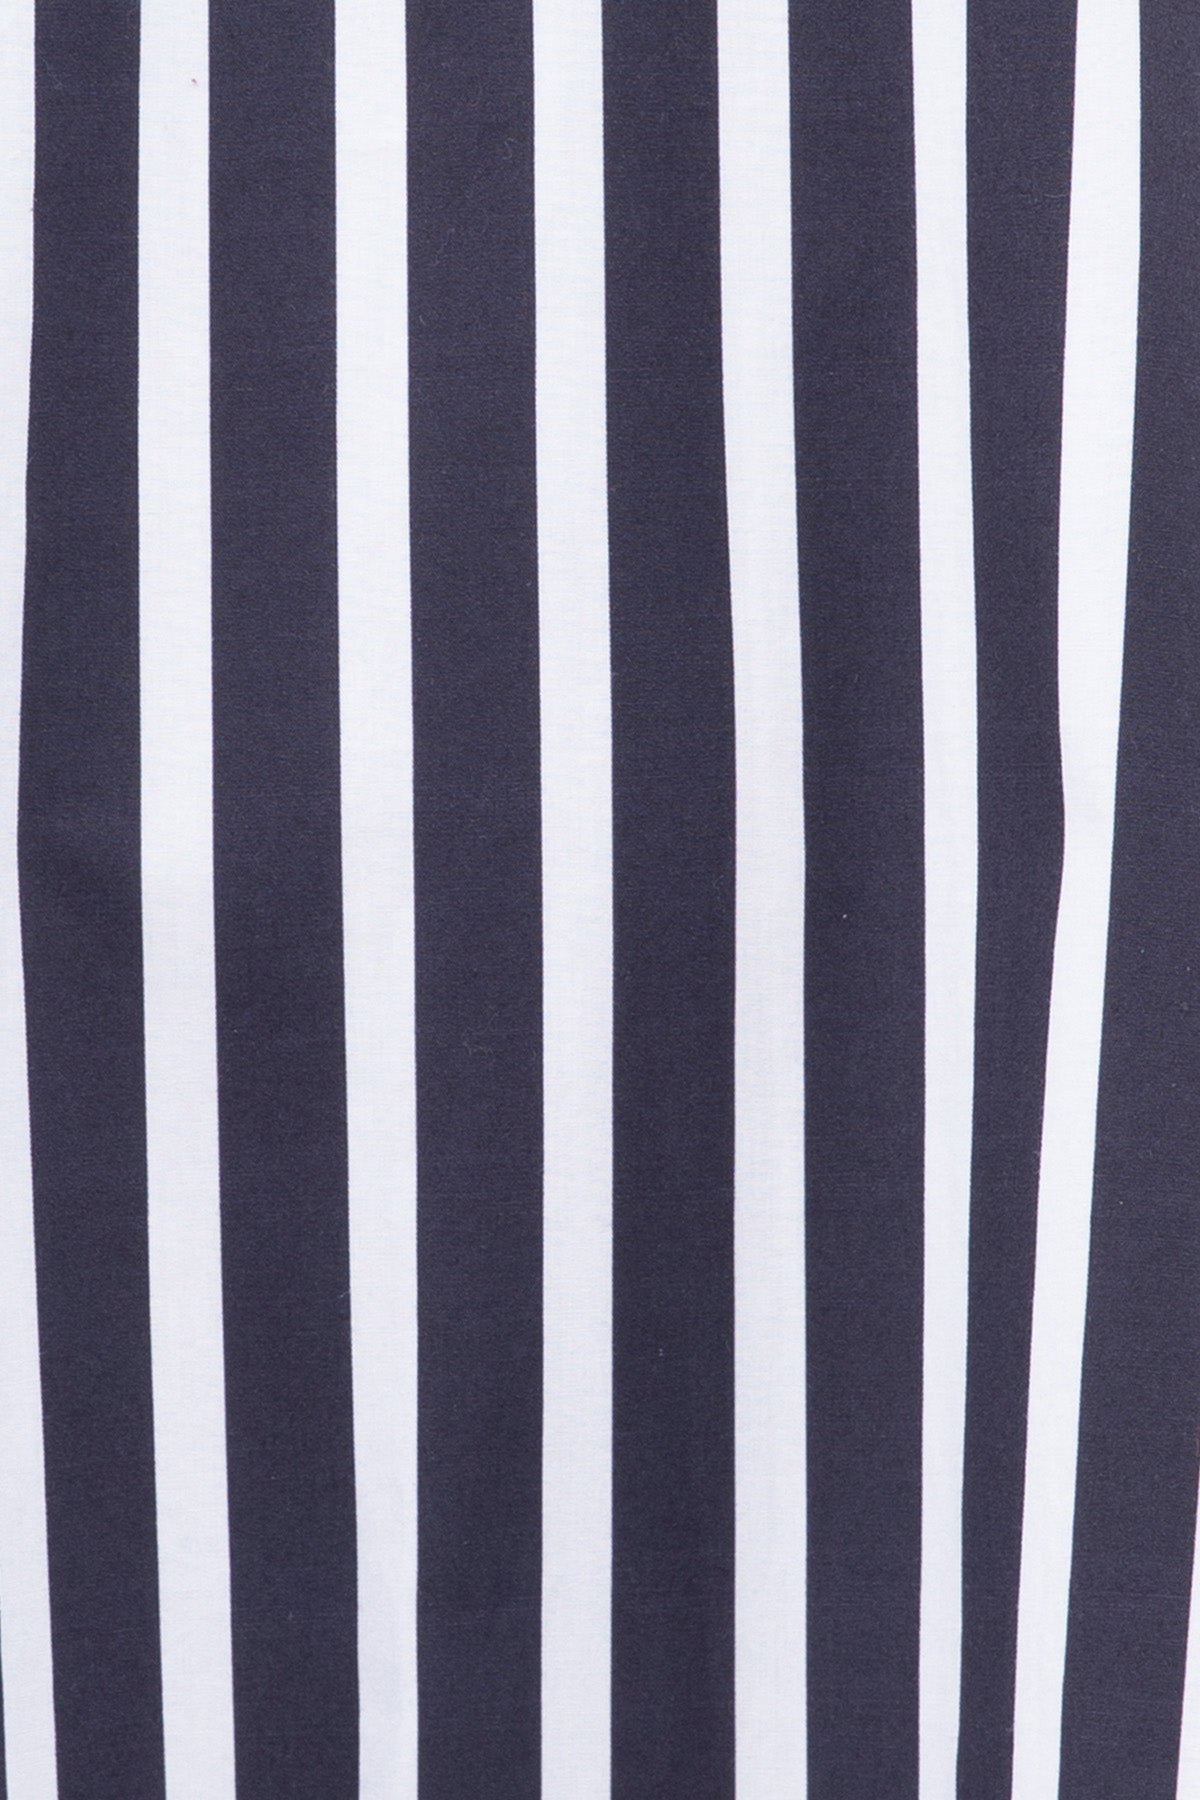 Stripe Swing Shirt Dress Navy and White